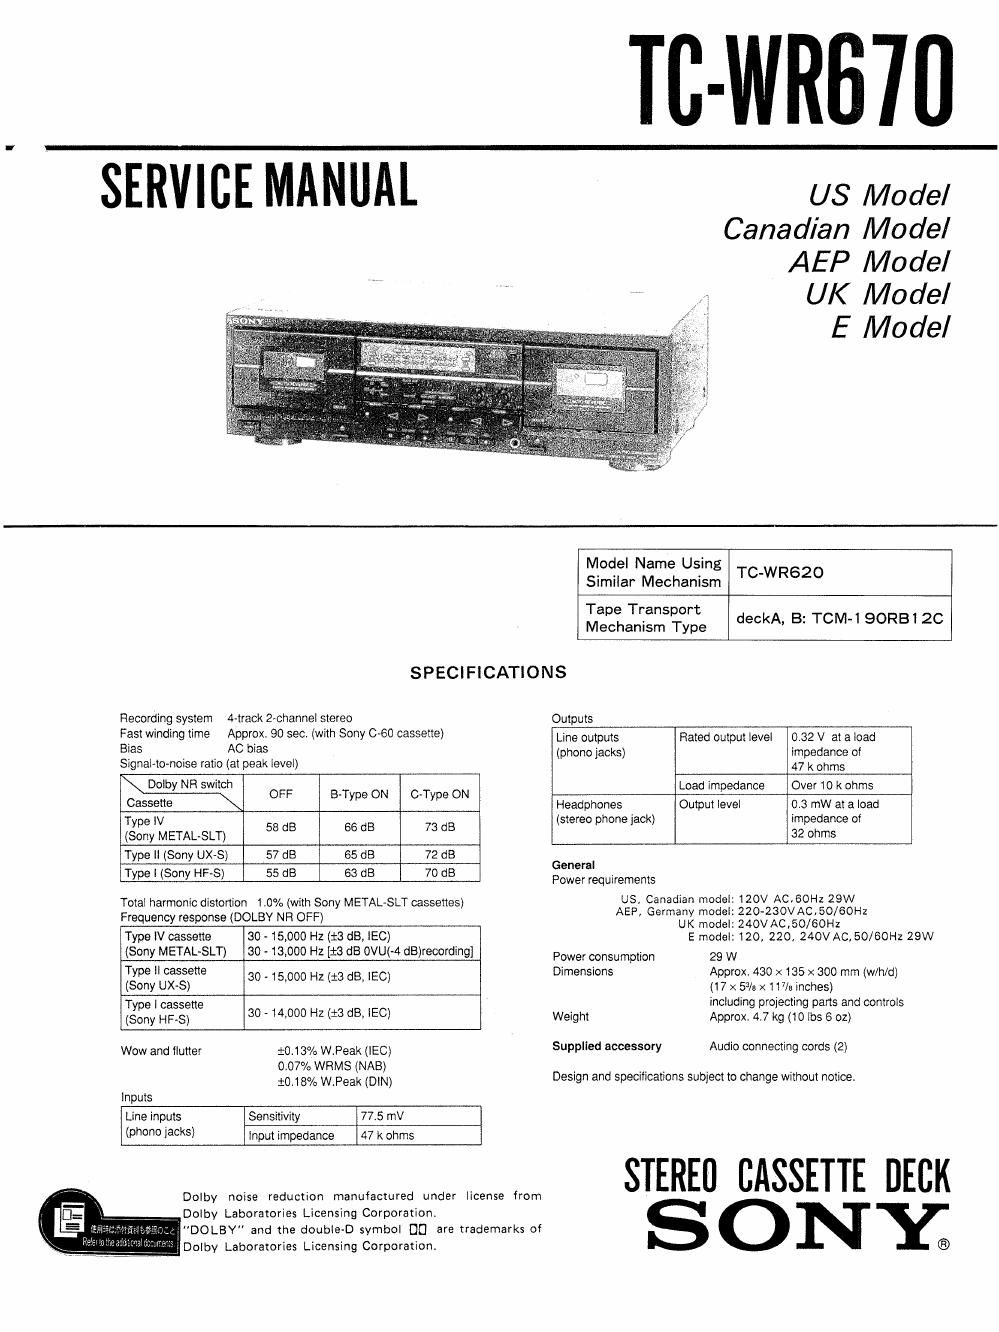 sony tc wr 670 service manual